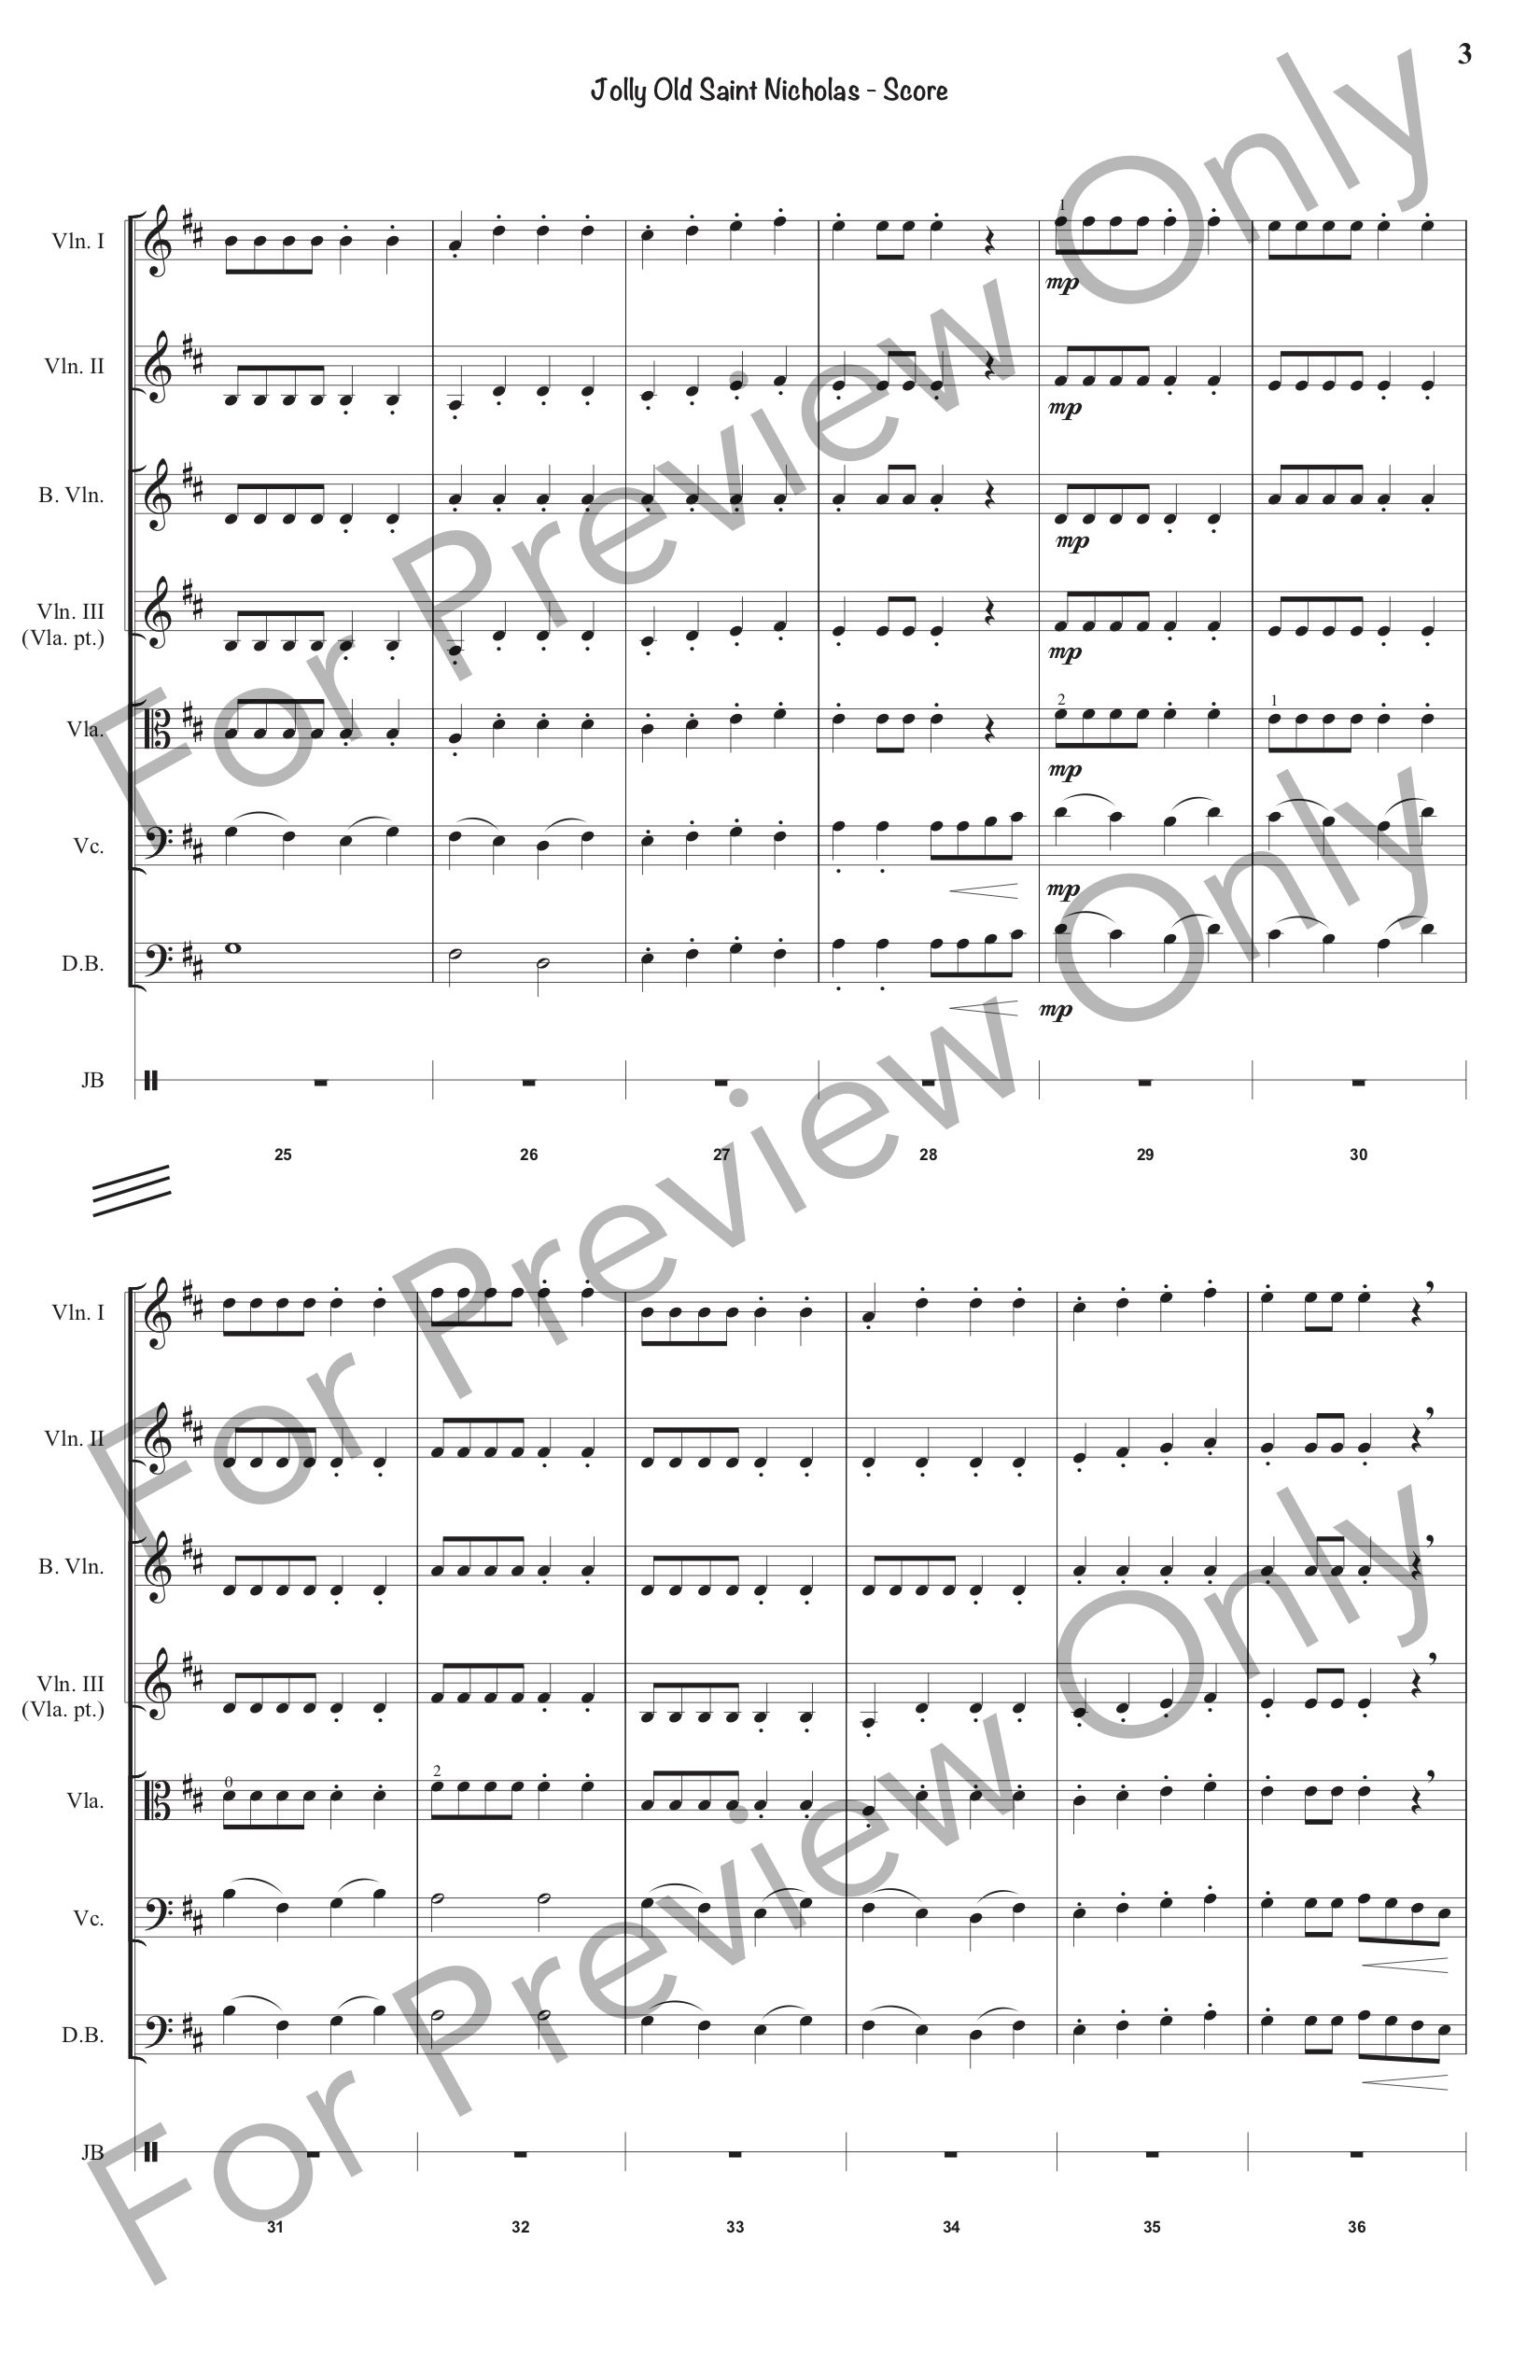 01 Jolly Old Saint Nicholas - Score_Preview p3.jpg